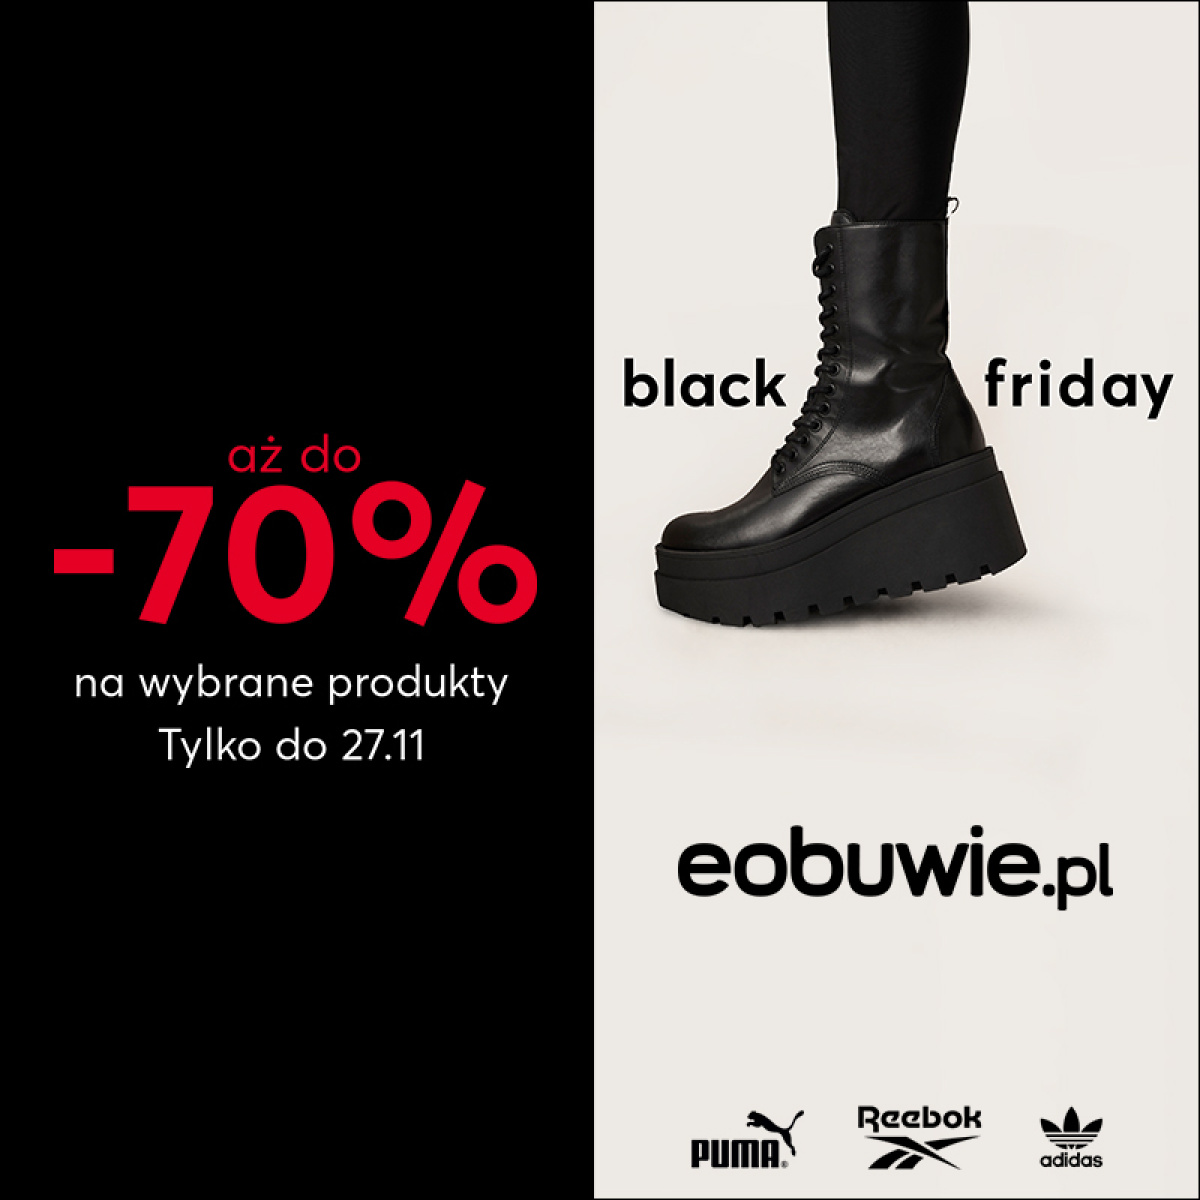 Black Friday w eobuwie.pl